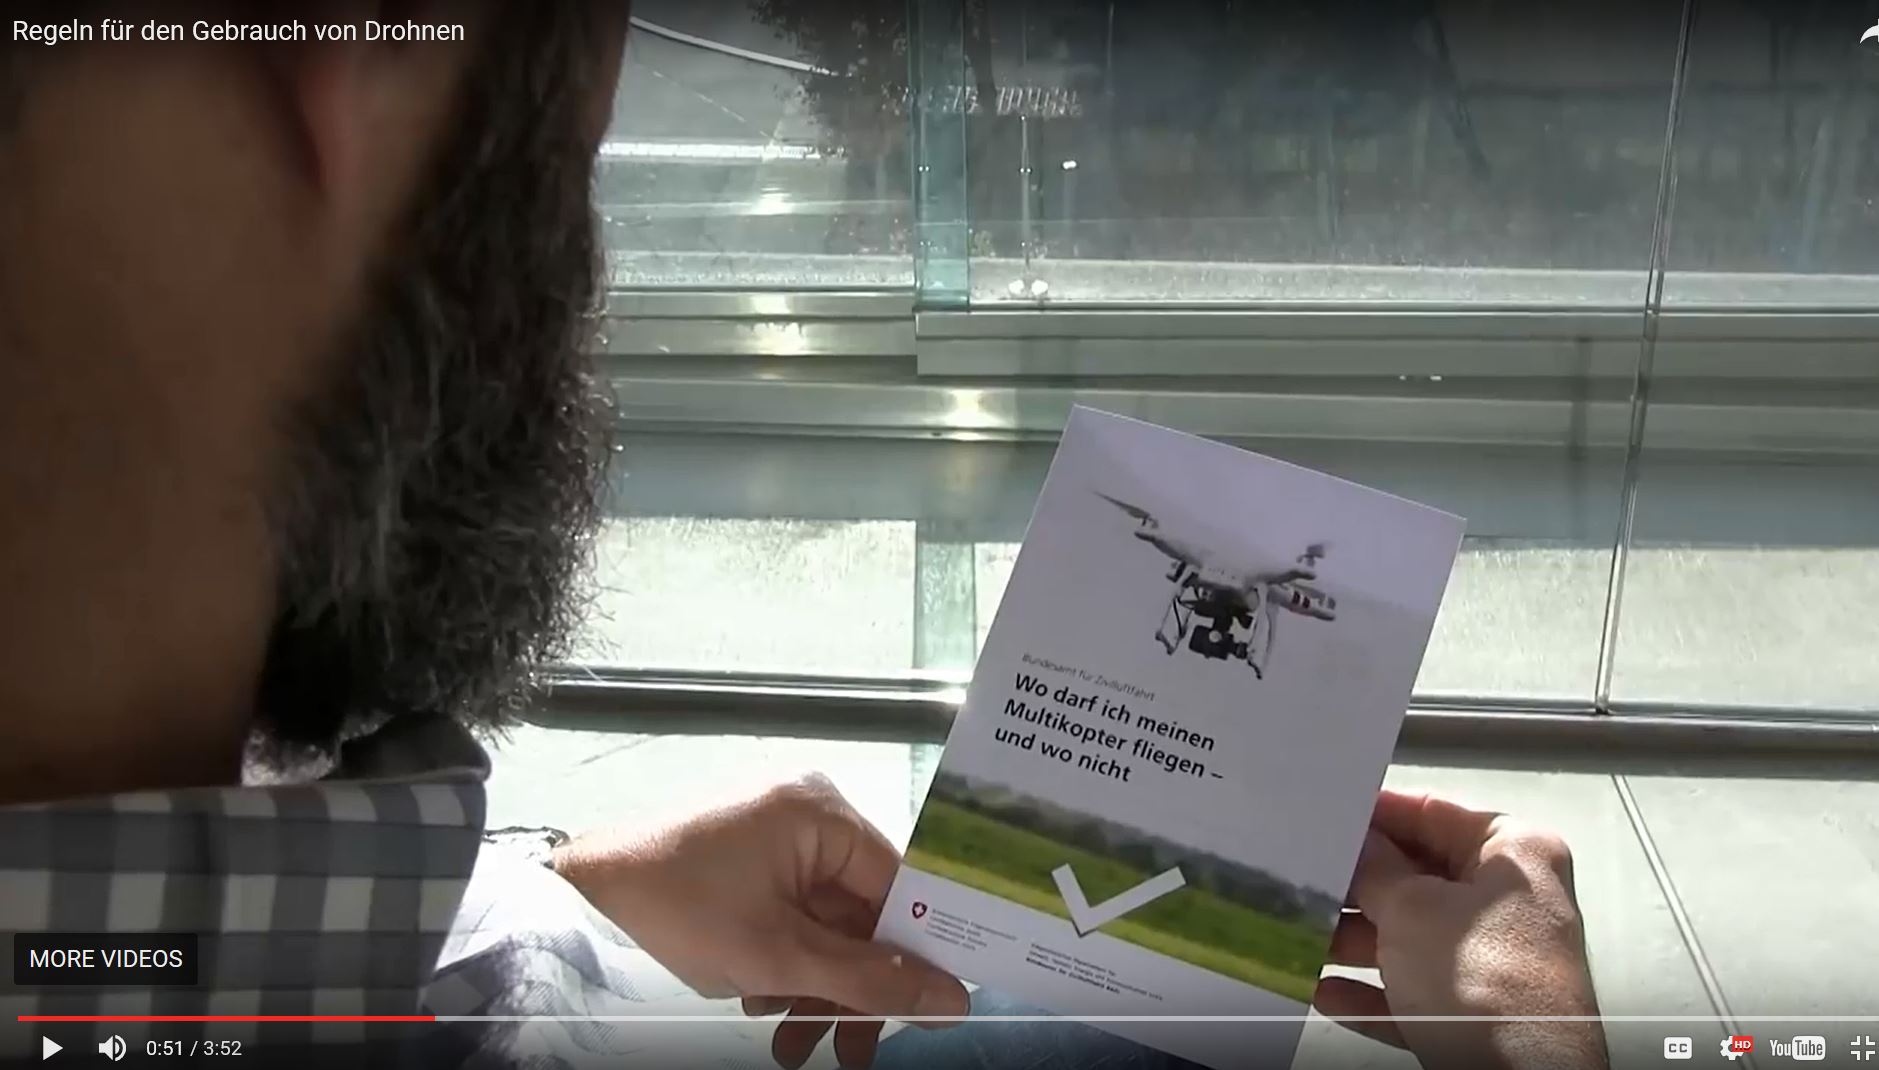 Video: Drones – quelques règles à observer